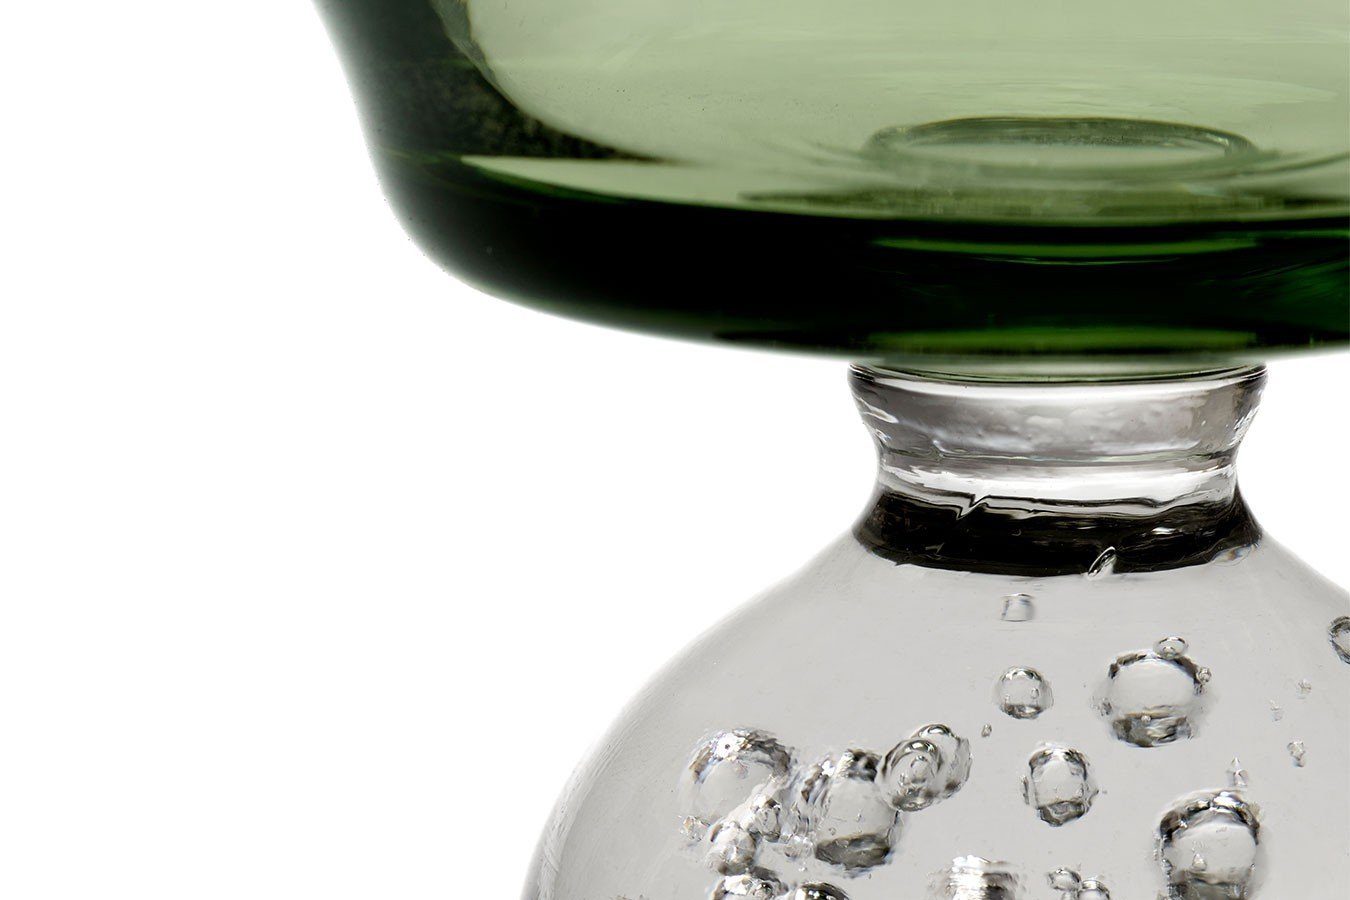 daslagerhaus living Wasserkrug Trinkglas Eternal grün-klar H cm 10 Snow